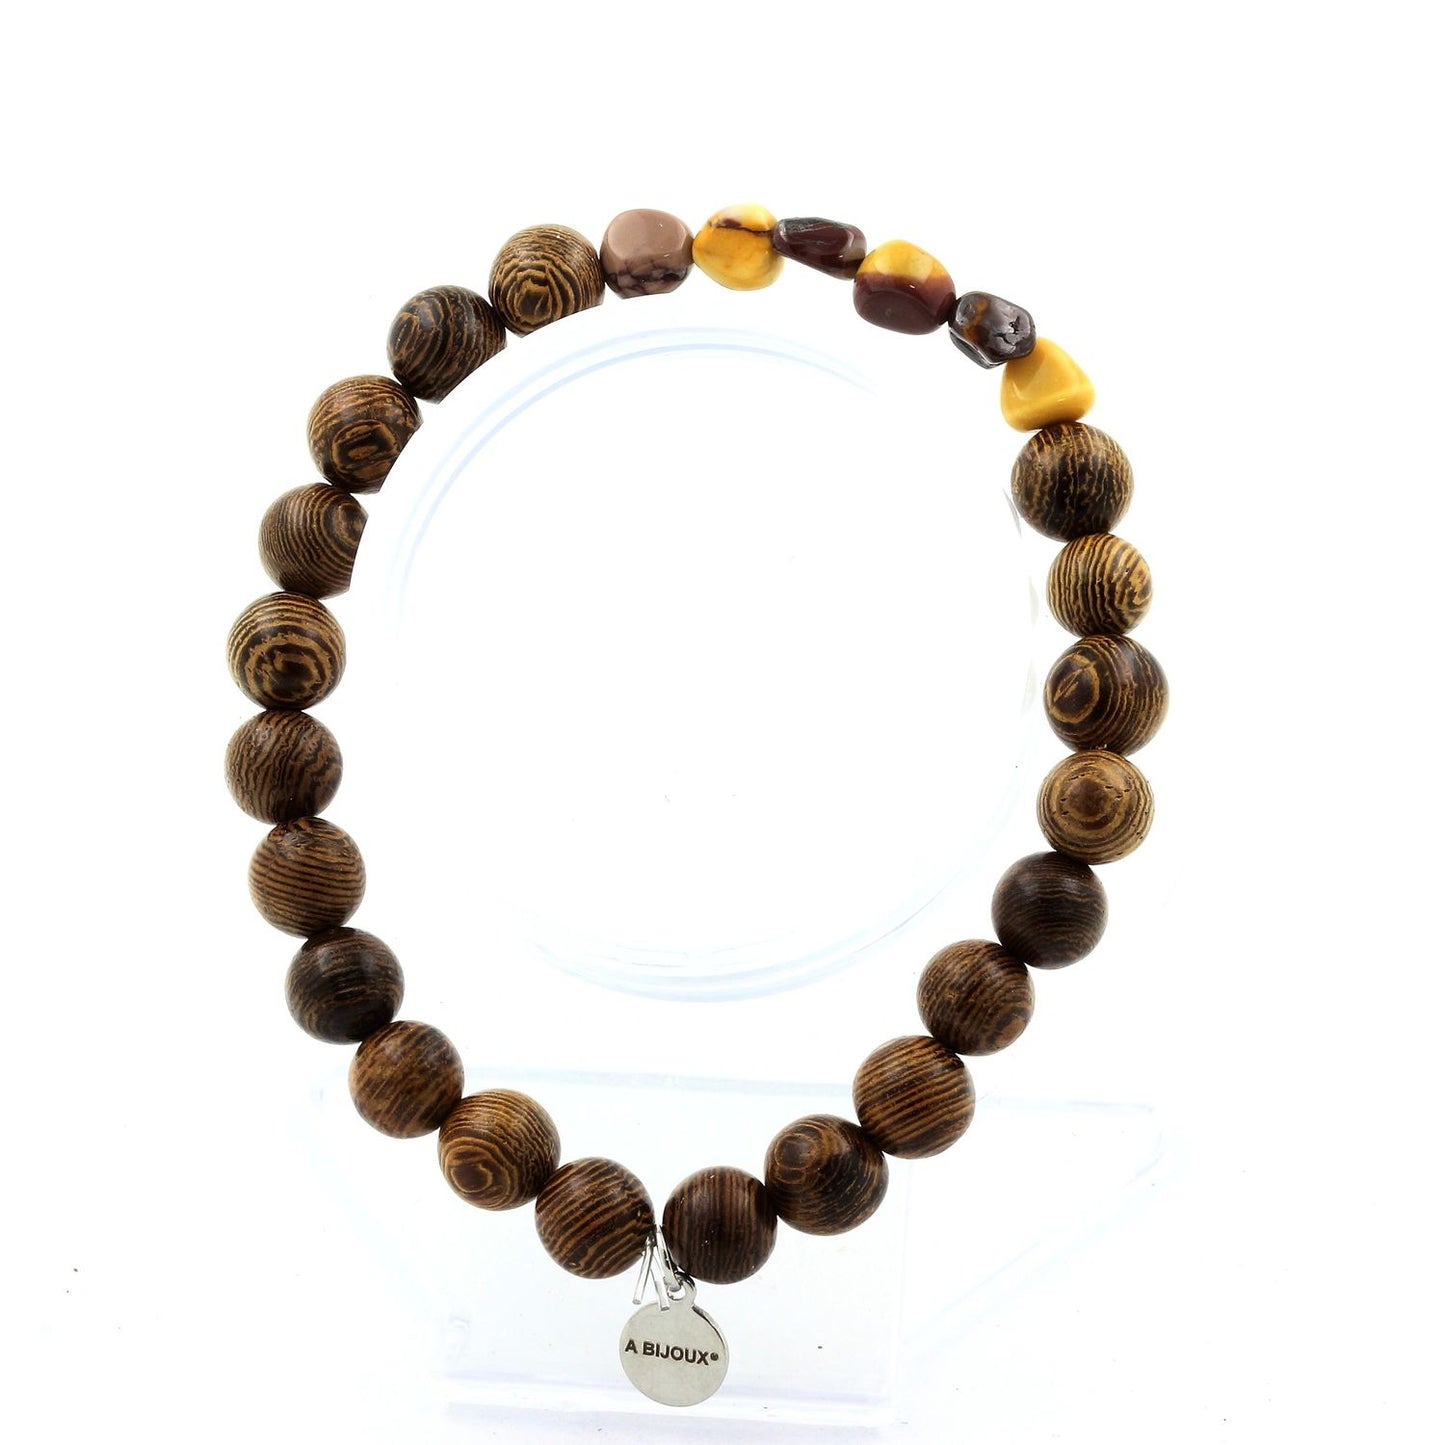 Mookaite d'Australie + Perles bois. Bracelet en Perles naturelles